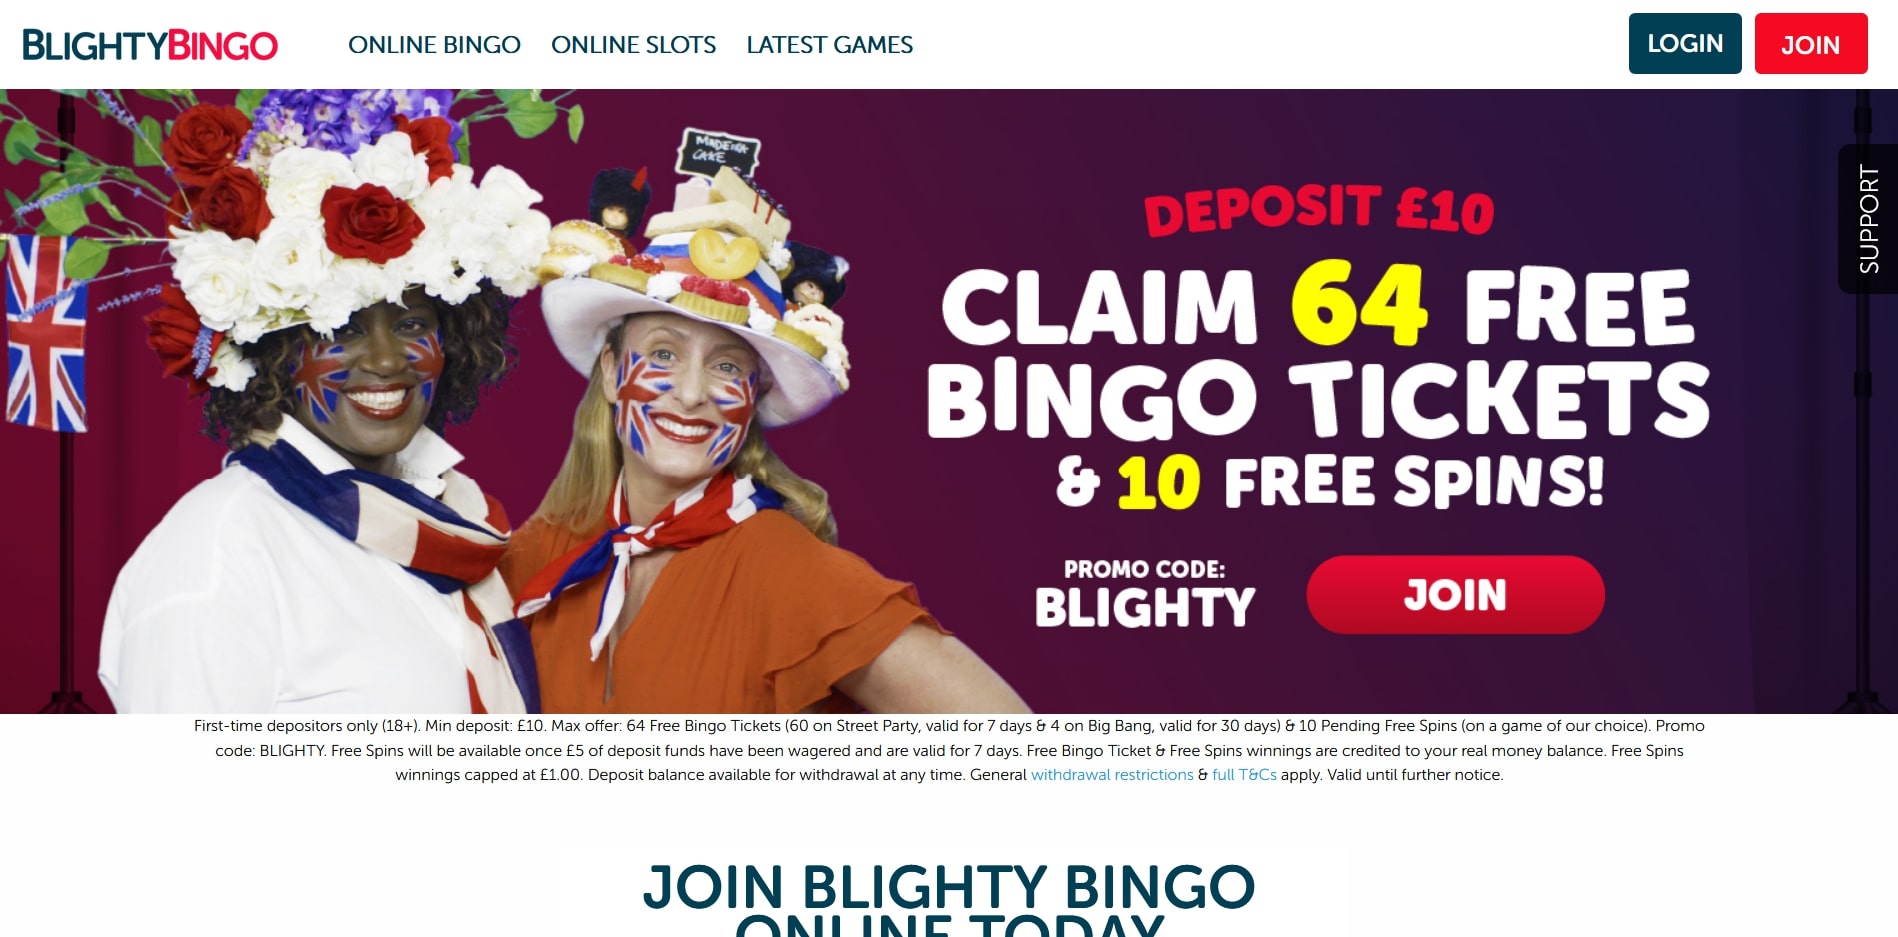 Blighty Bingo Casino Review